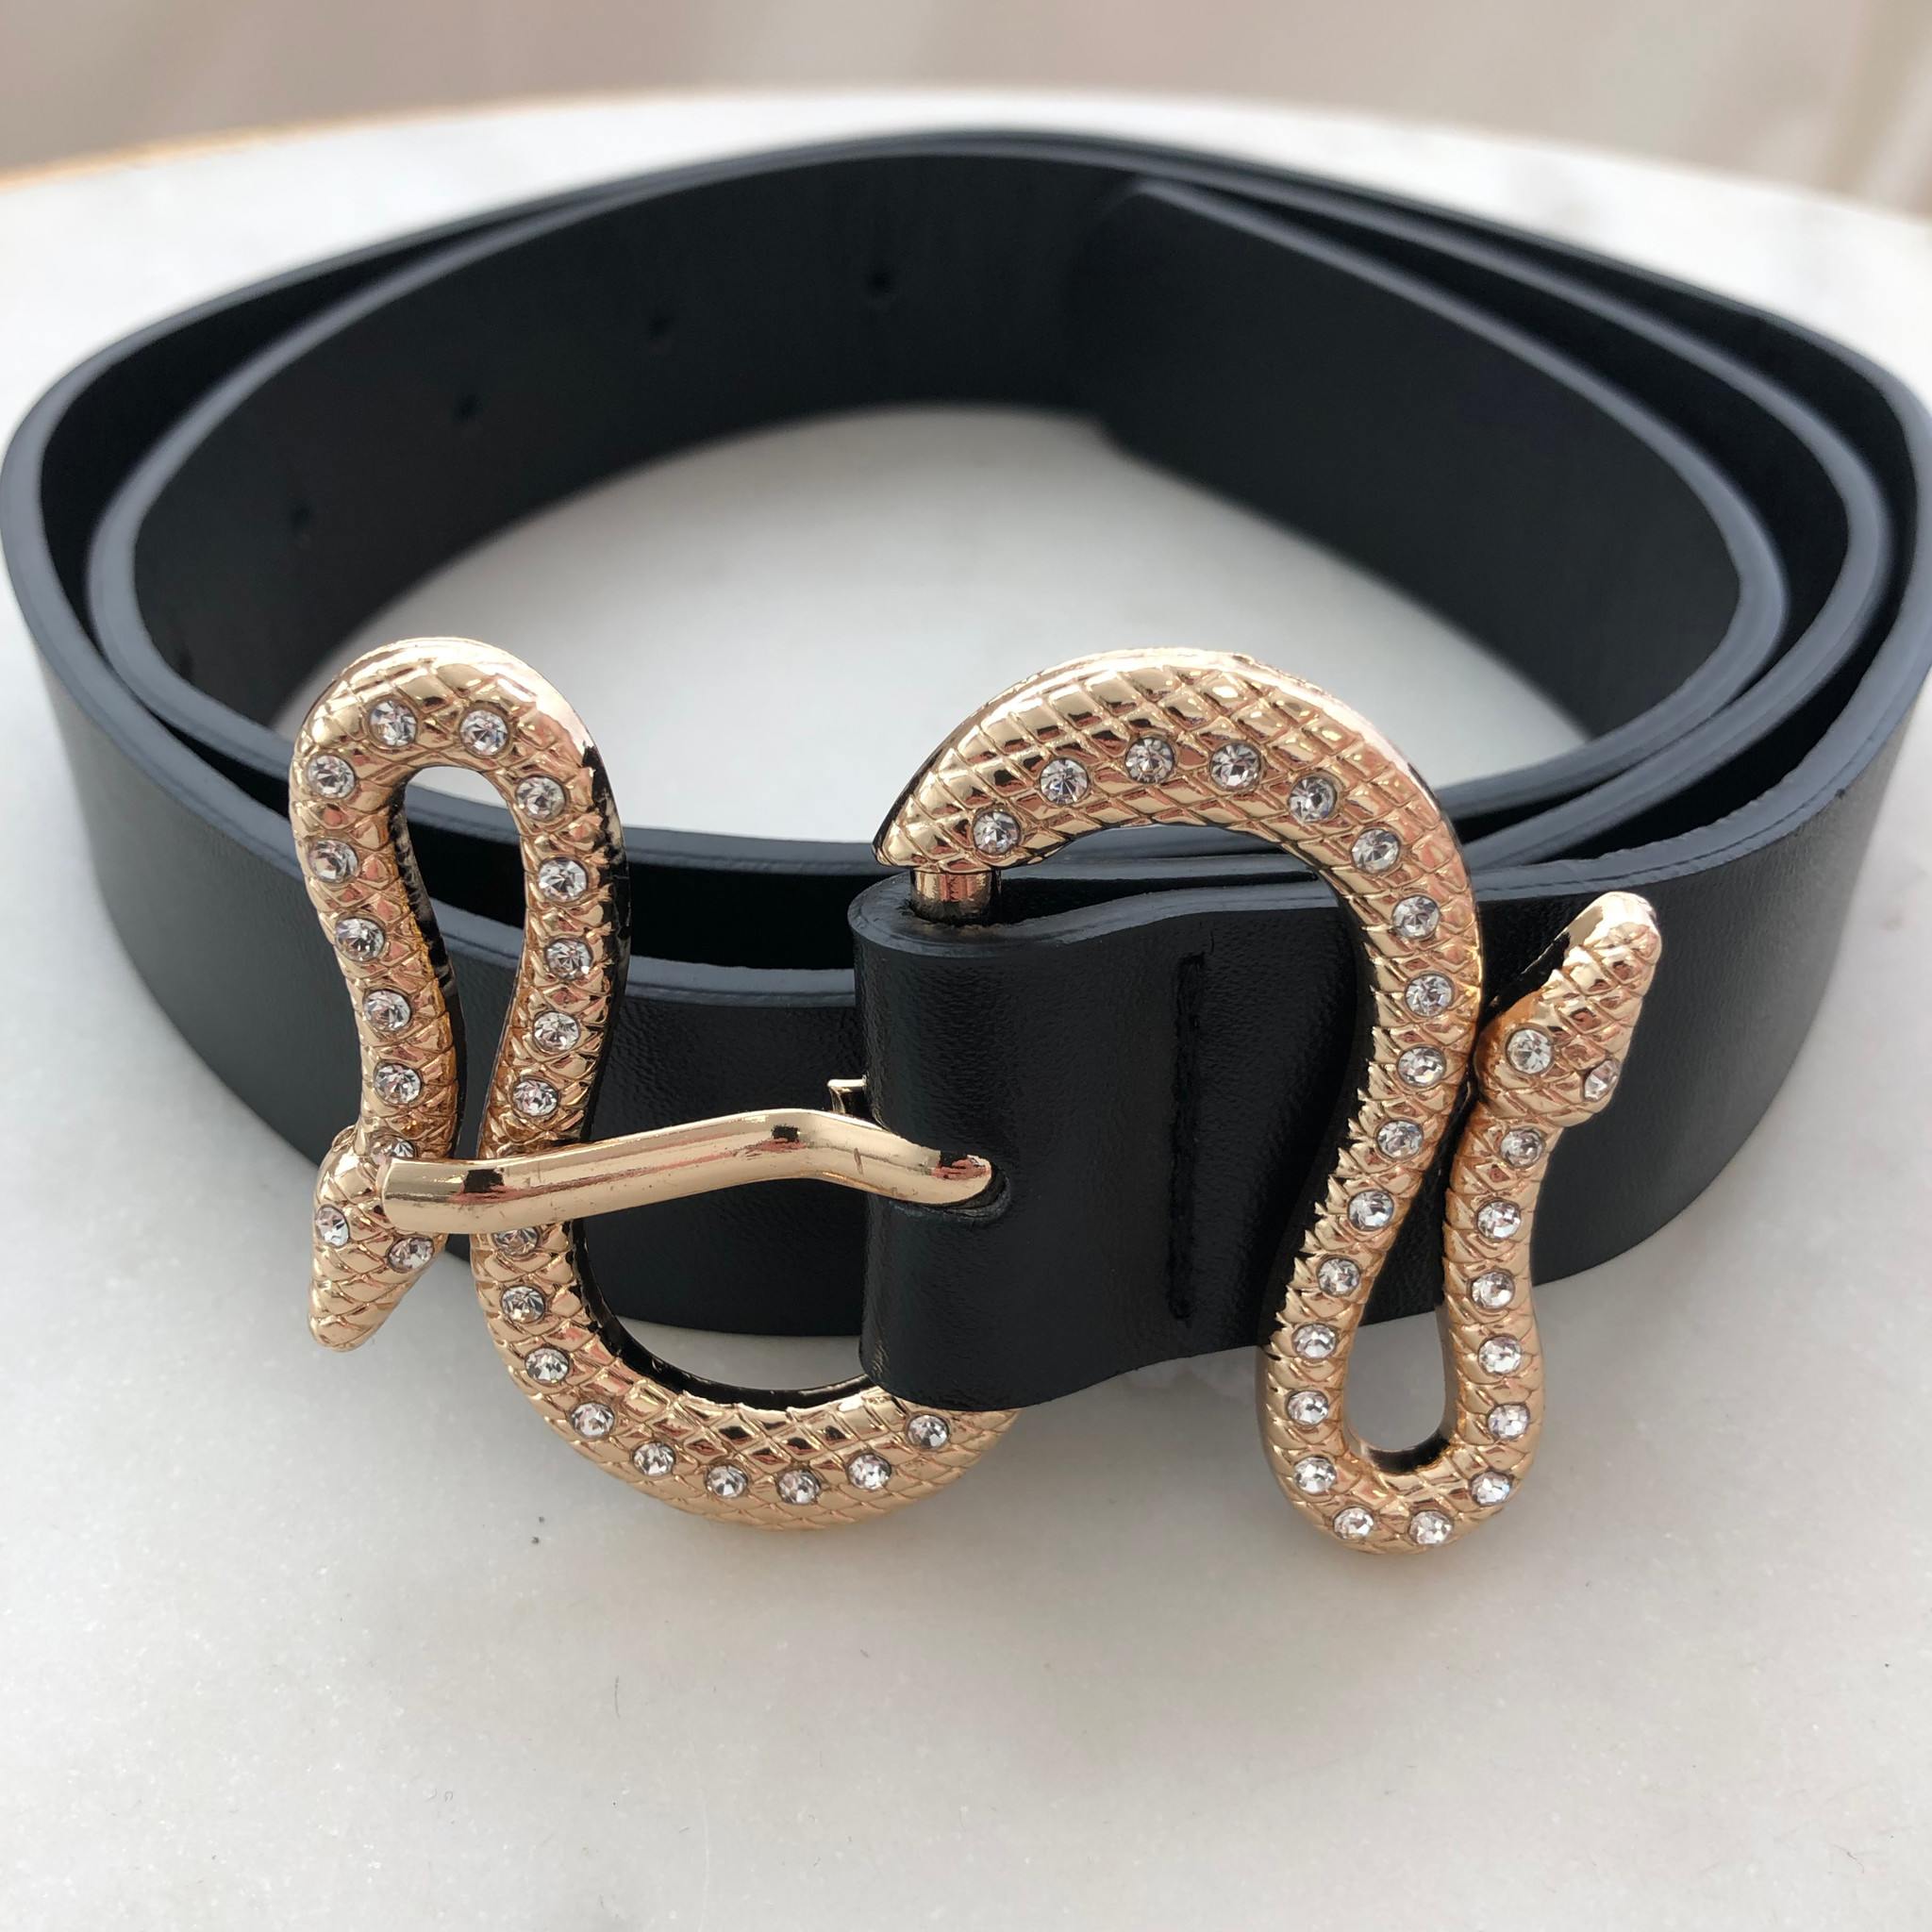 Diamond snake belt